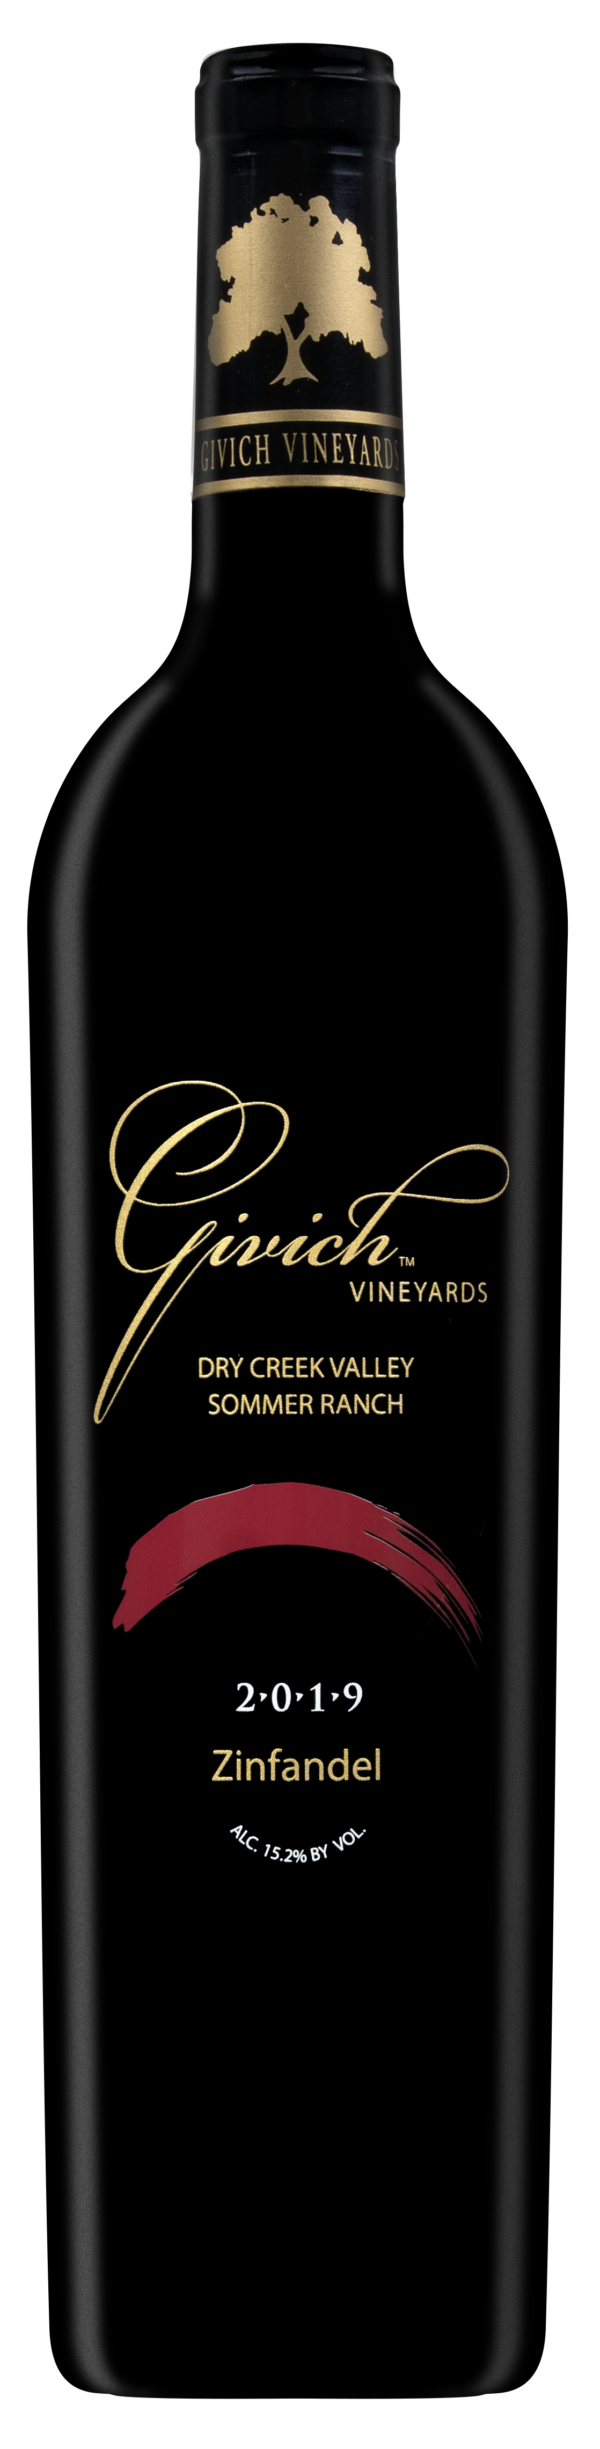 Givich Dry Creek Sonoma Zinfandel 2019